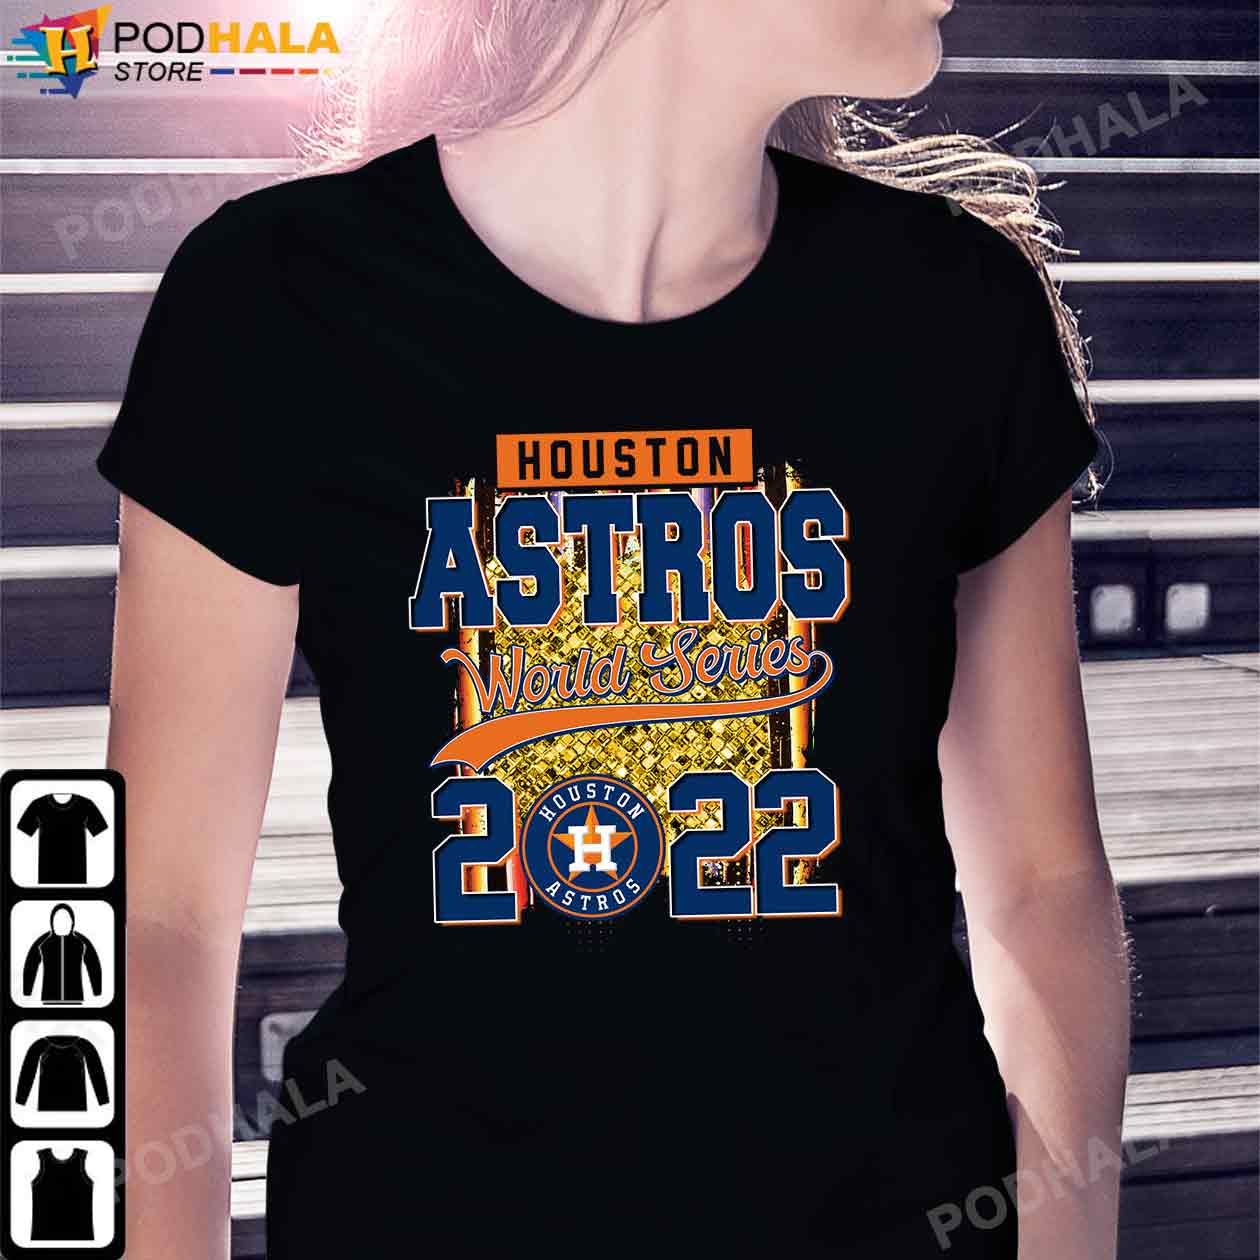 Houston Astros World Series Shirt, Astro Shirts, Gifts for Houston